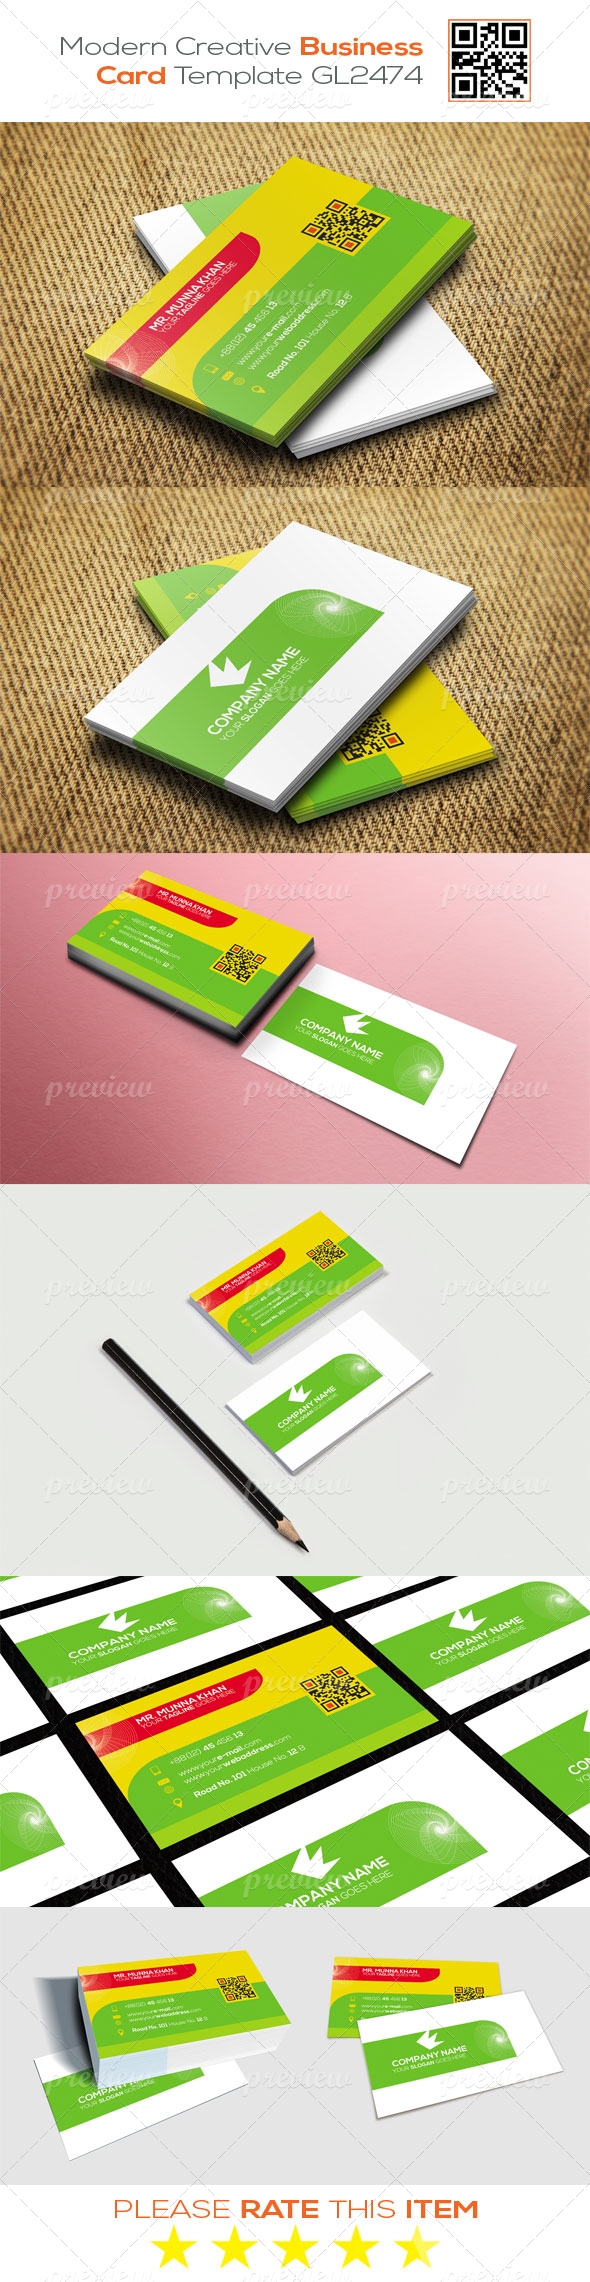 Modern Creative Business Card Template GL2474